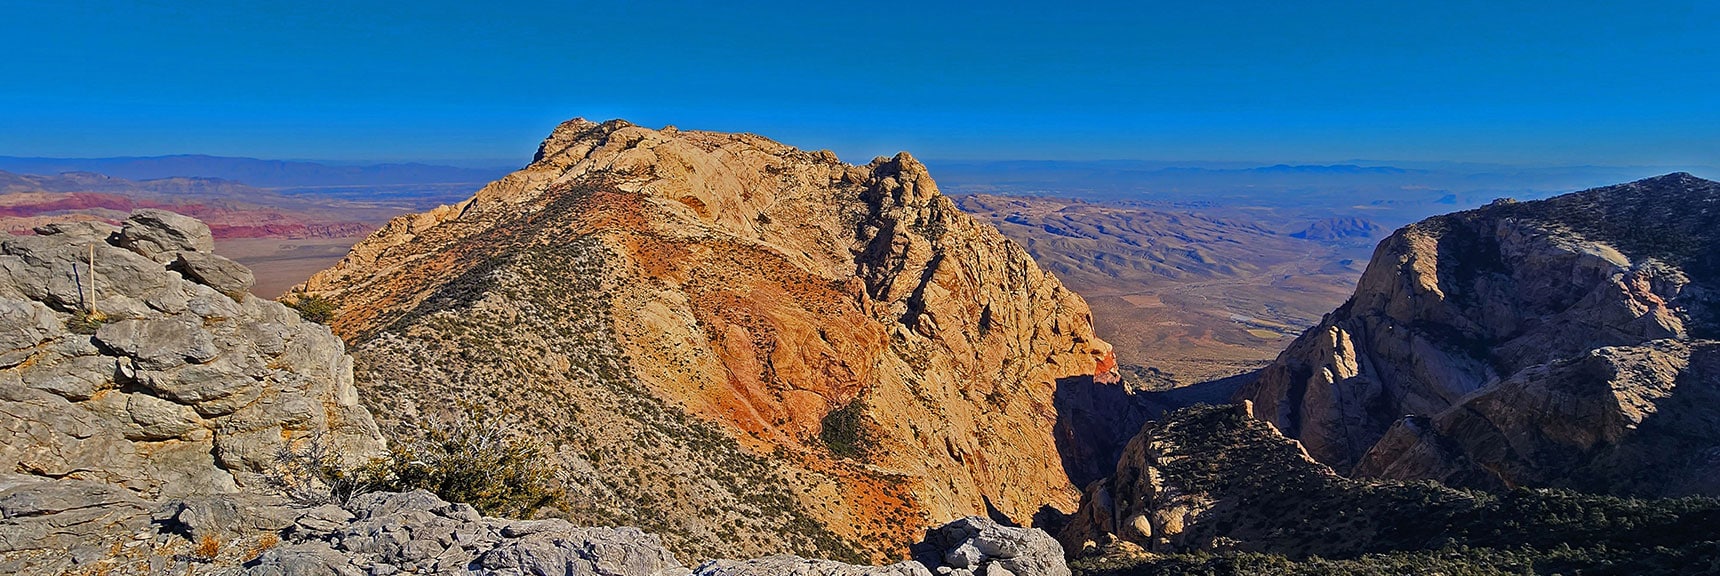 Mt Wilson Over Sheer Cliff Edge on Ridgeline | Rainbow Mountains Mid Upper Crest Ridgeline from Lovell Canyon, Nevada